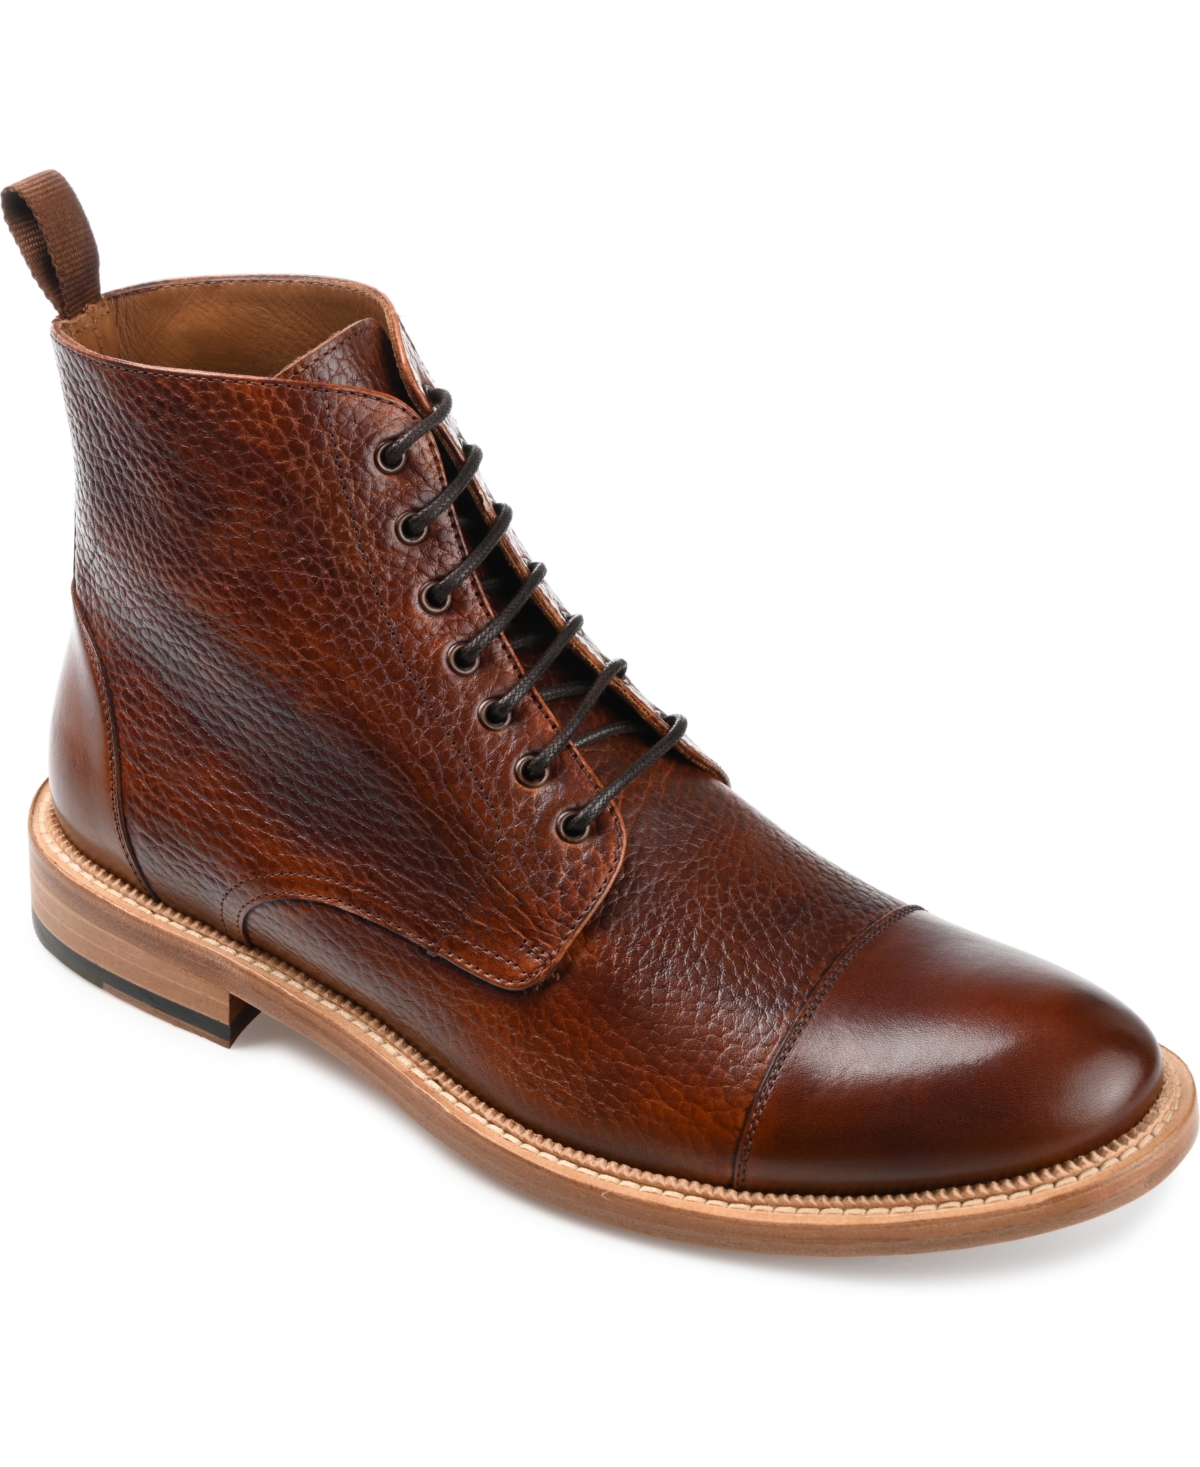 Men's Rome Full-grain Leather Cap Toe Dress Shoes - Brown